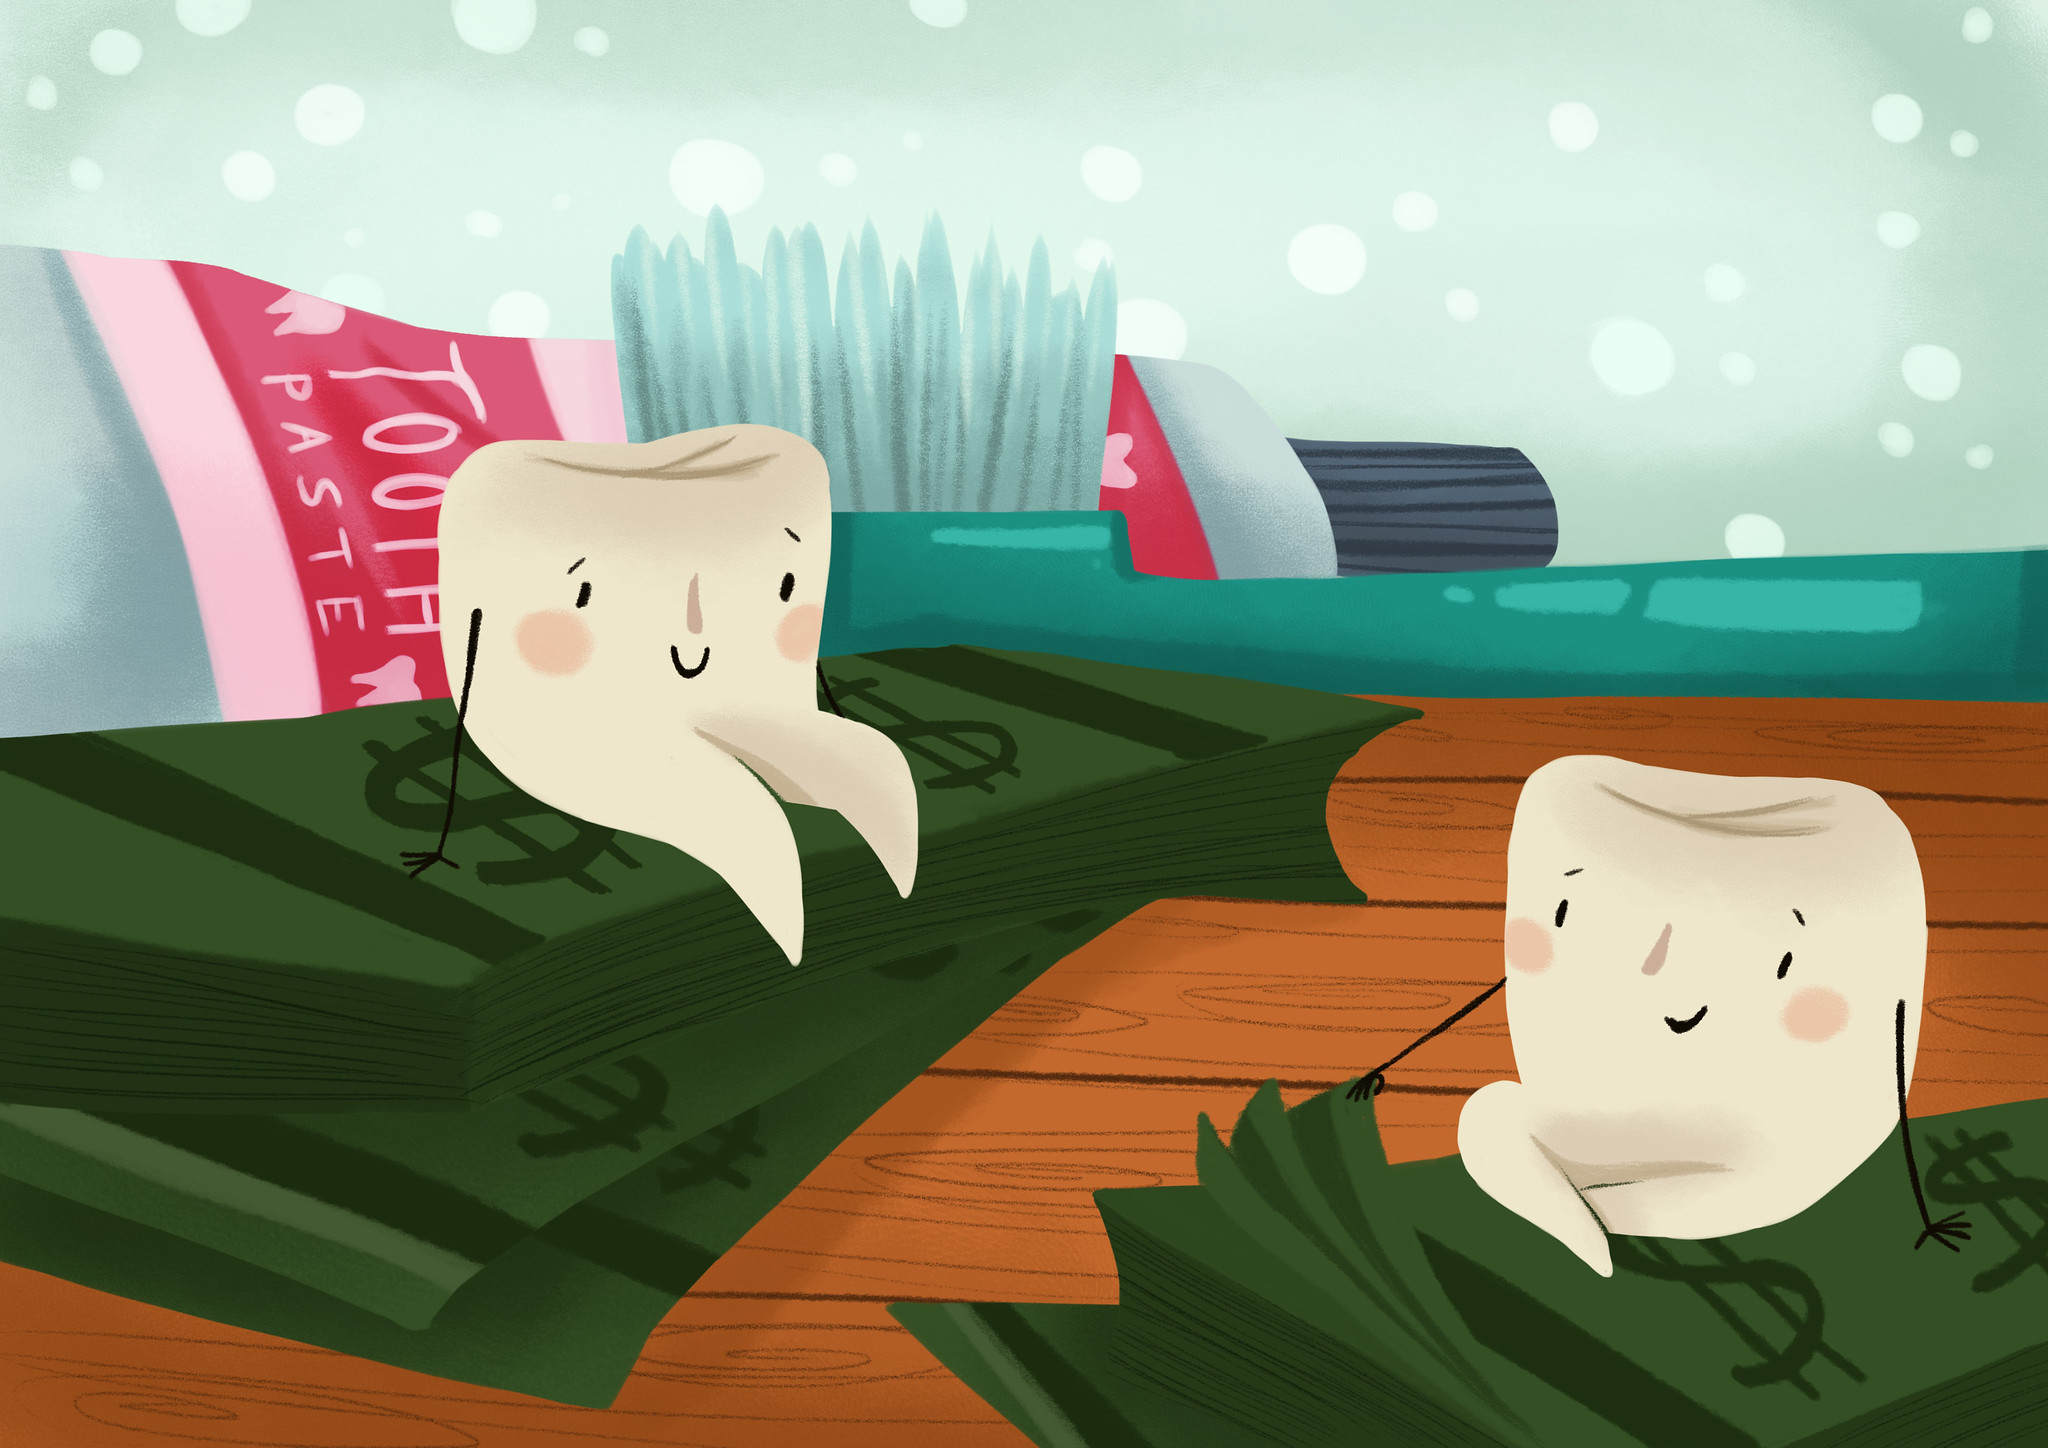 dental benefits, graphic illustration of two teeth sitting on money